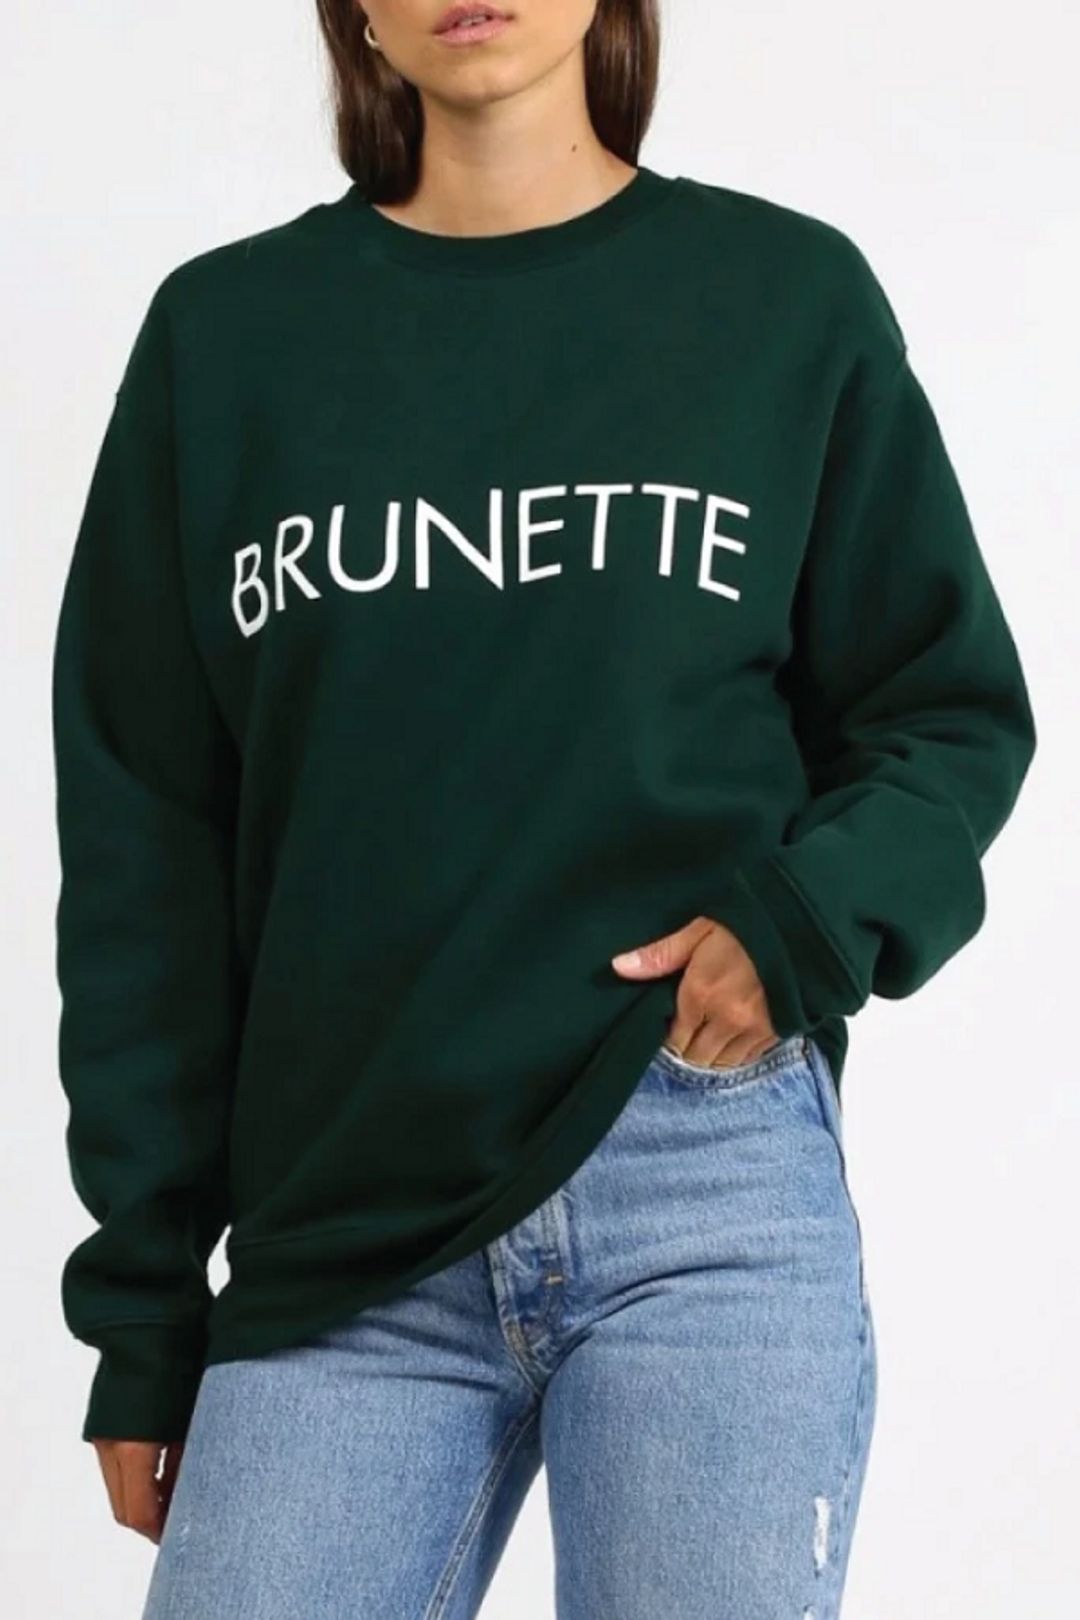 Evergreen Core Crew in Brunette & Blonde